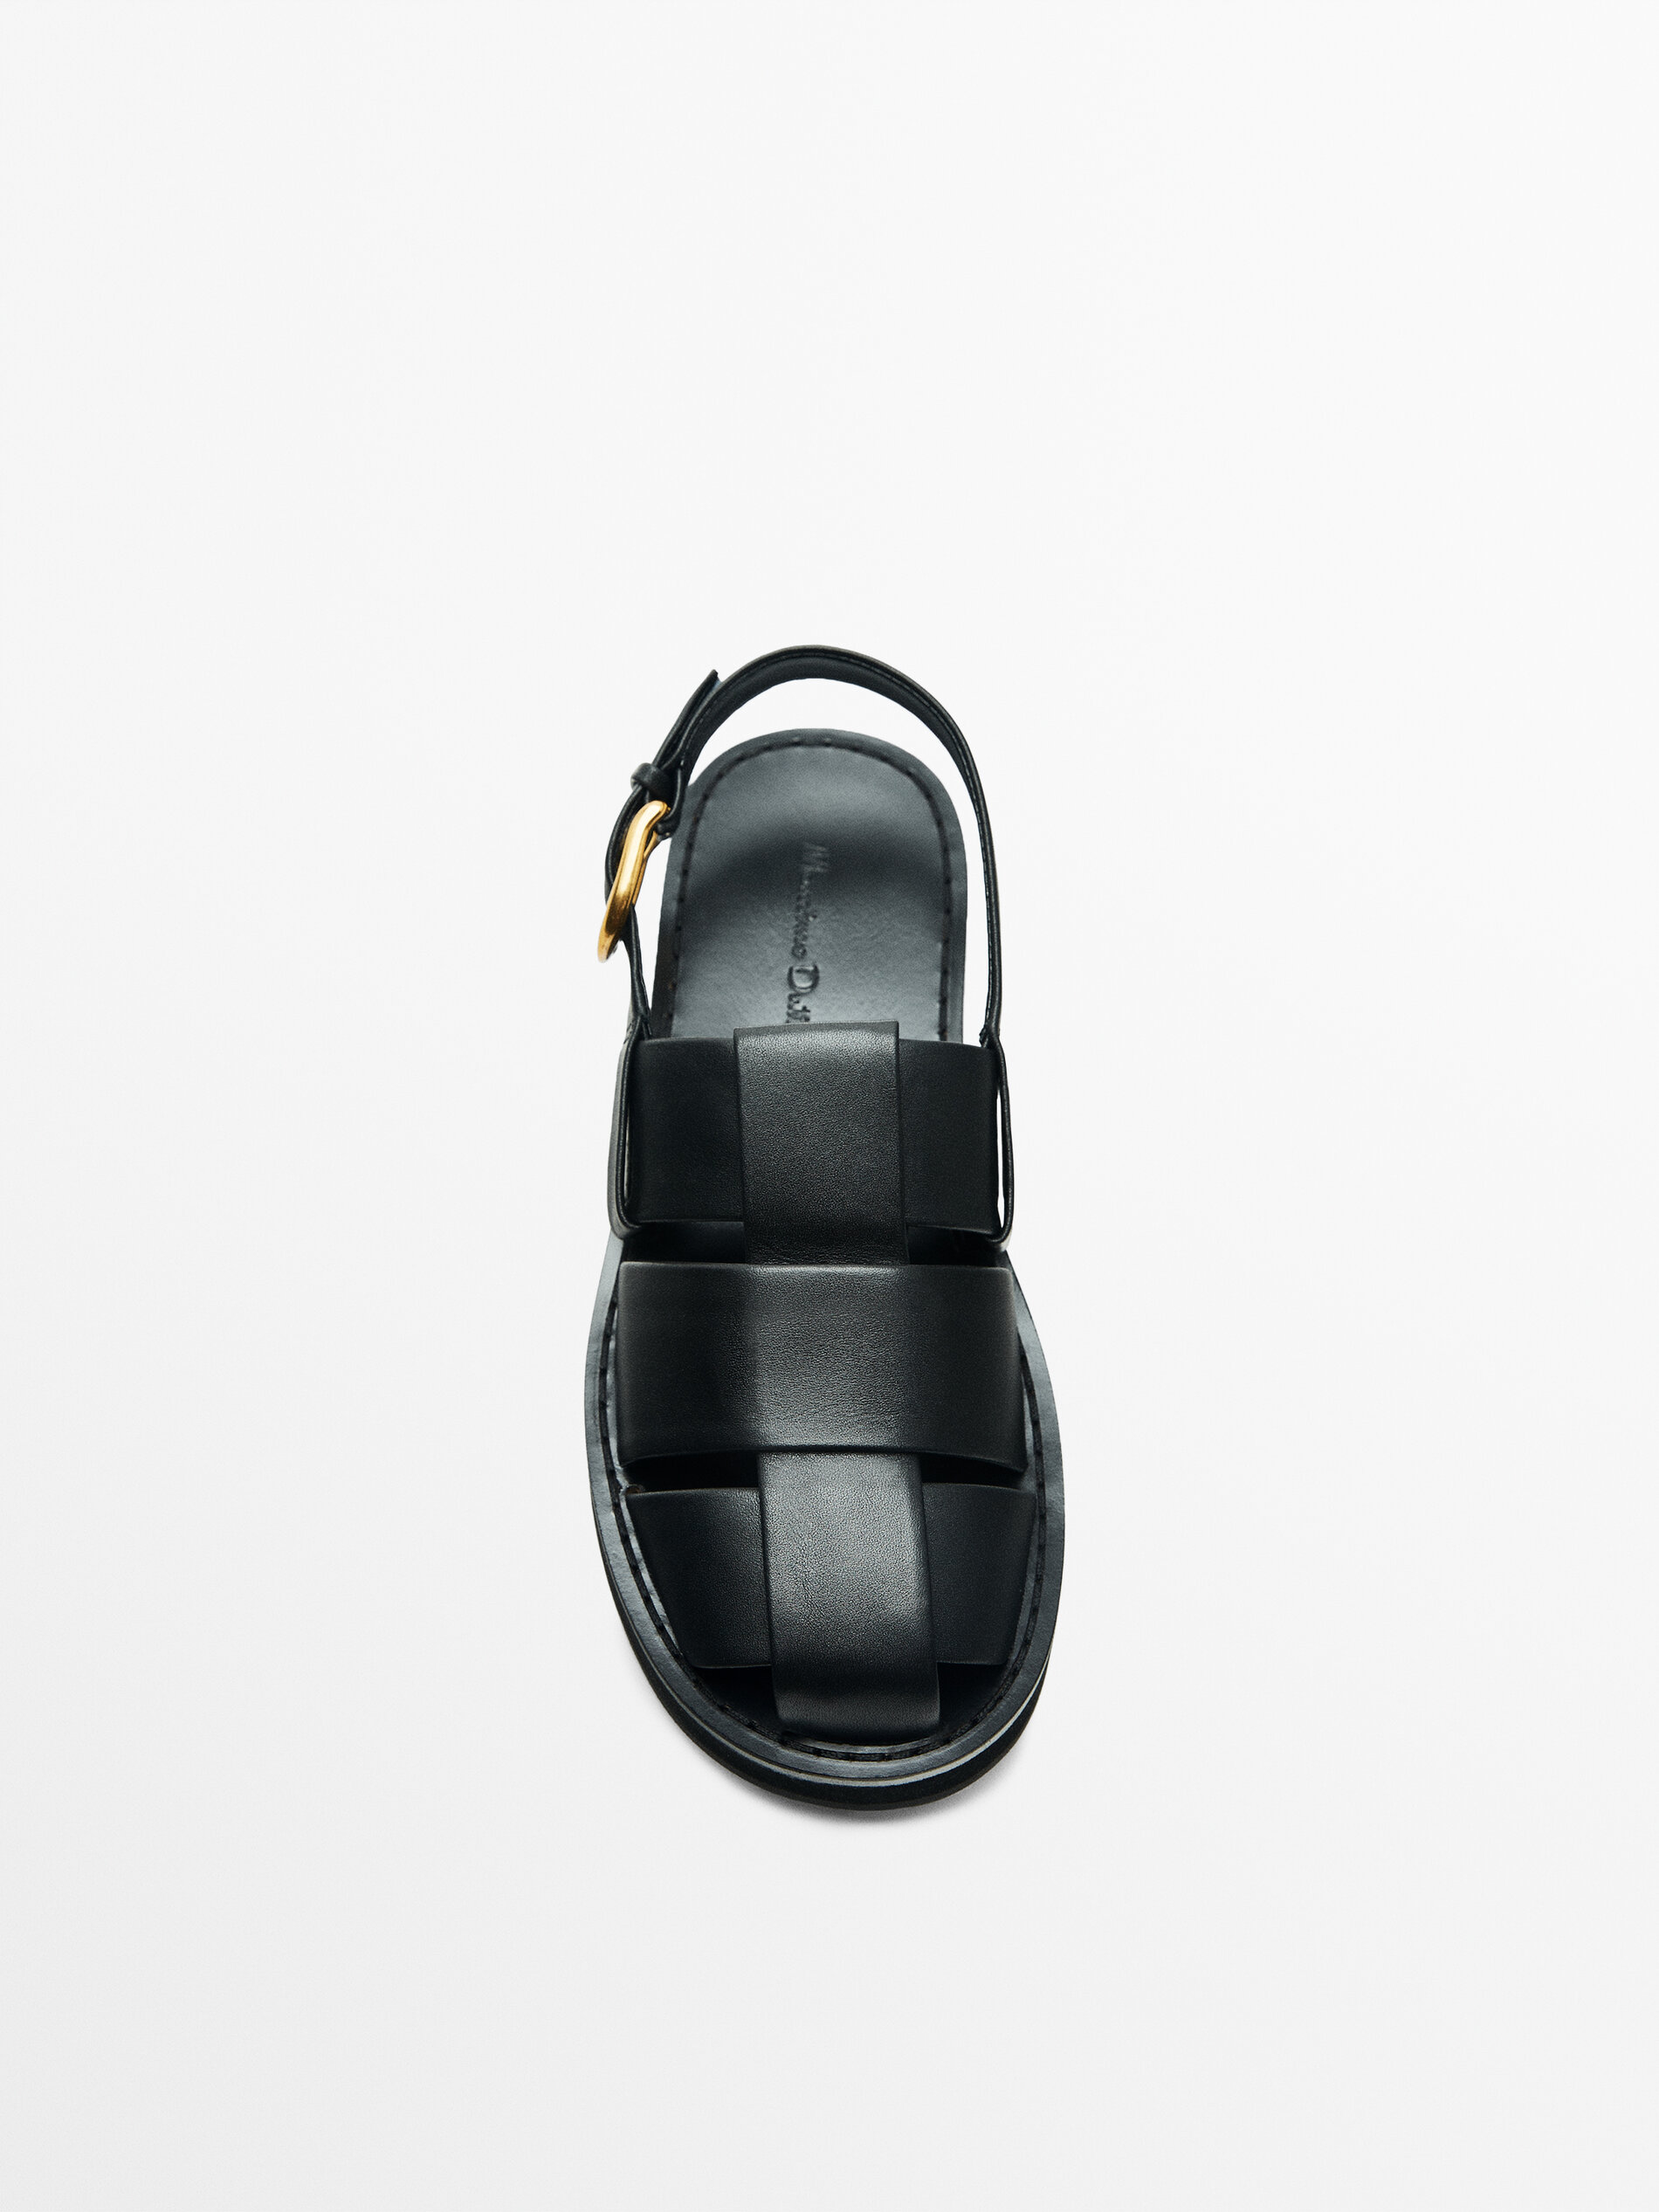 Massimo Dutti Leather Slingback Cage Sandals - Big Apple Buddy